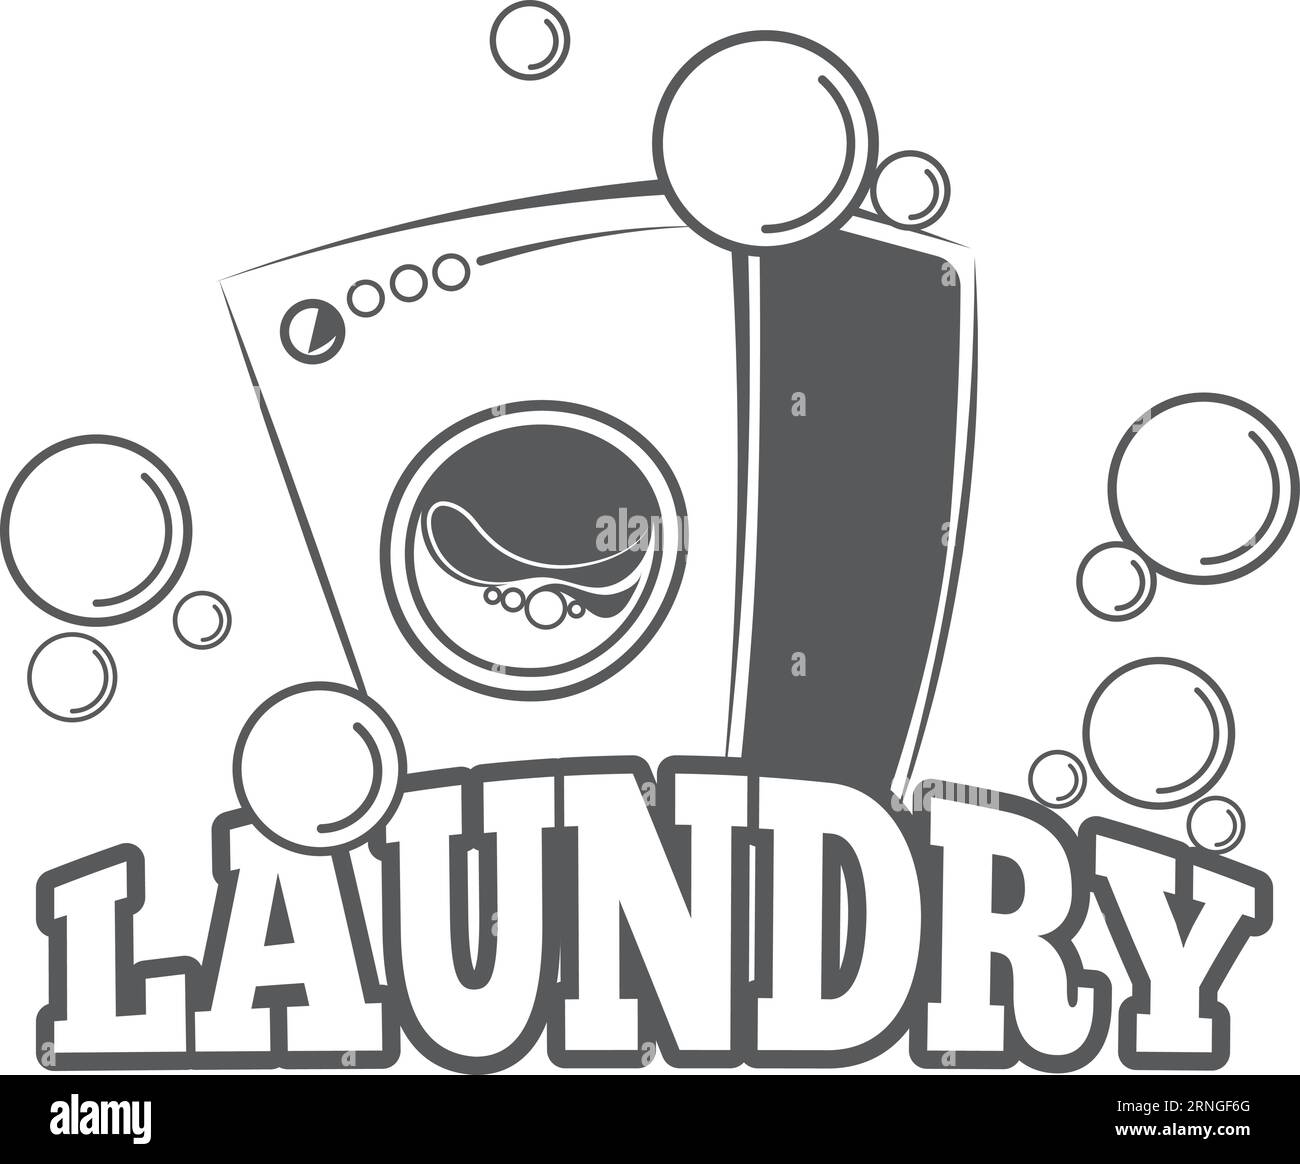 Laundy service logo. Black laundromat machine emblem Stock Vector